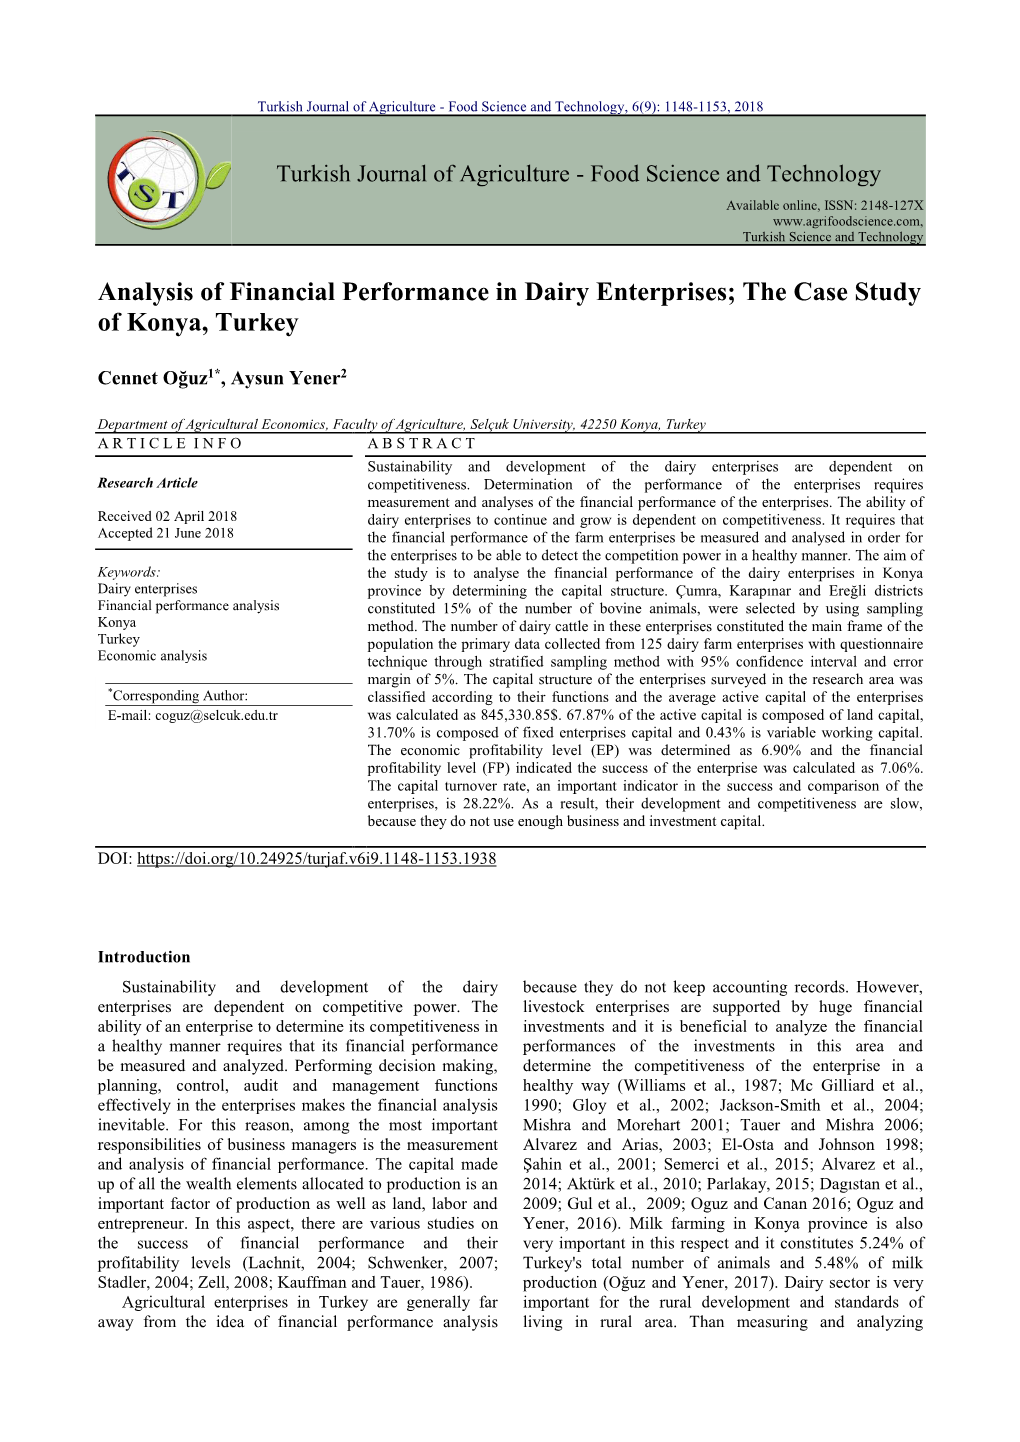 Analysis of Financial Performance in Dairy Enterprises; the Case Study of Konya, Turkey